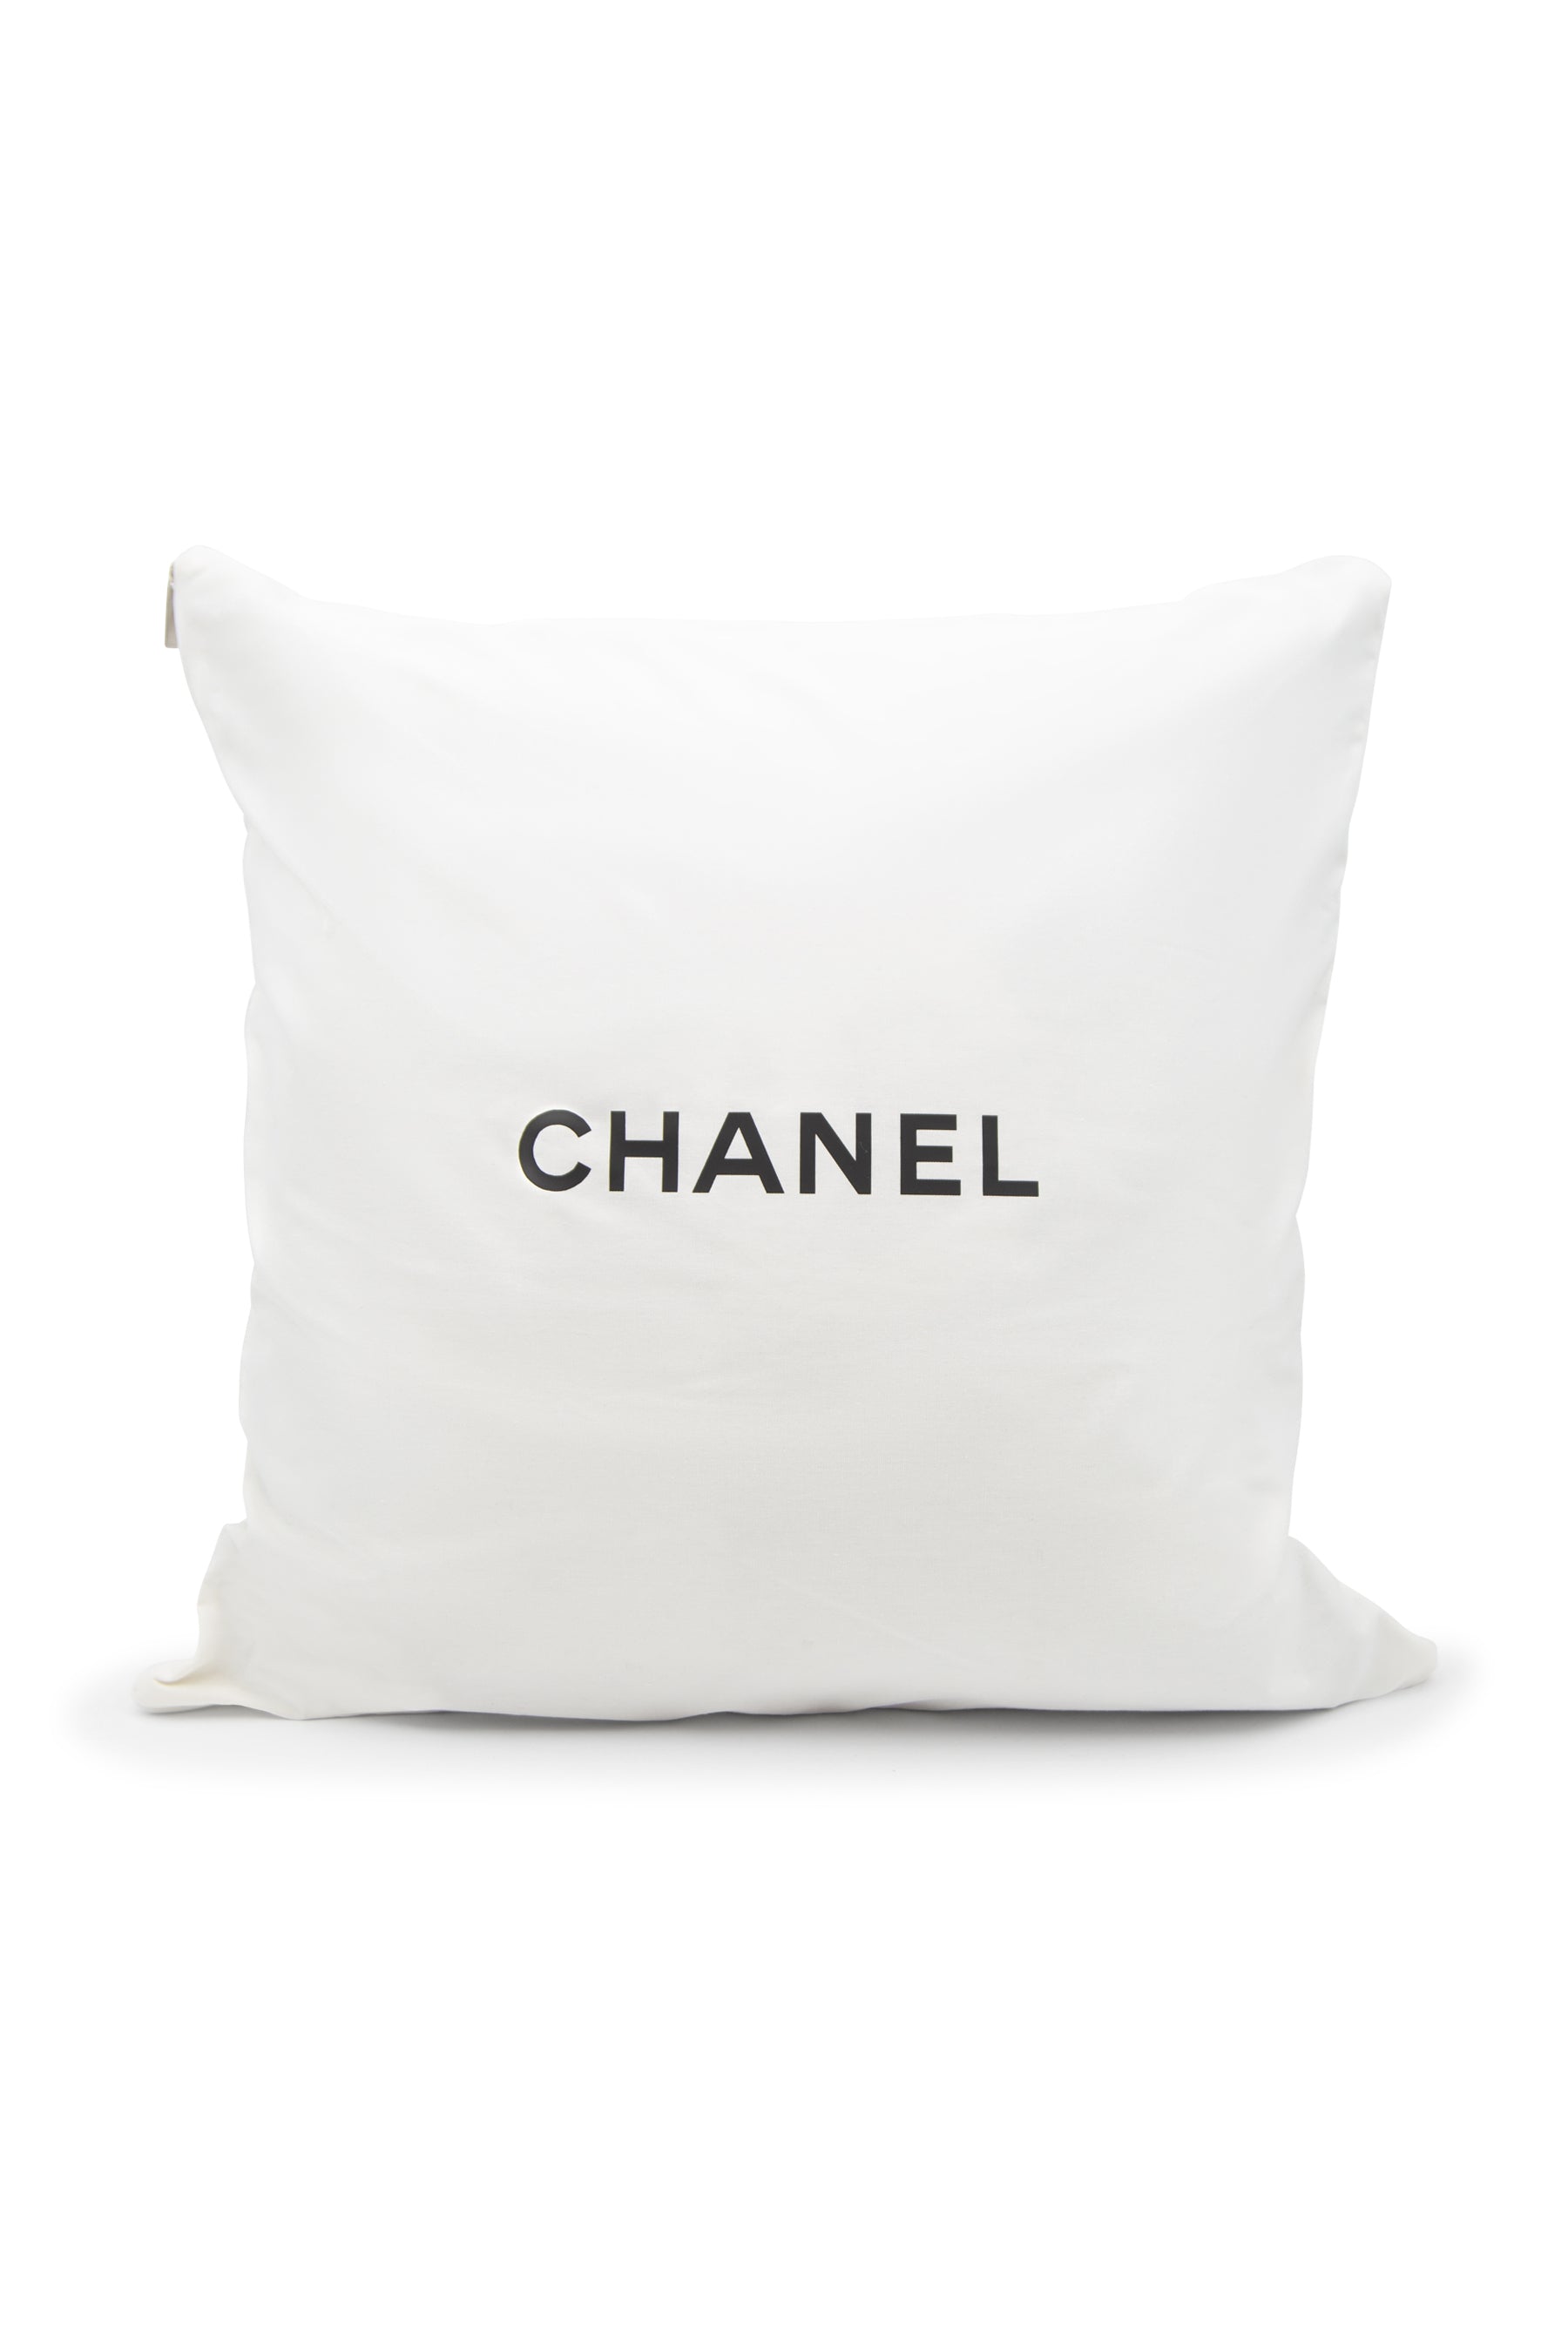 chanel throw pillow